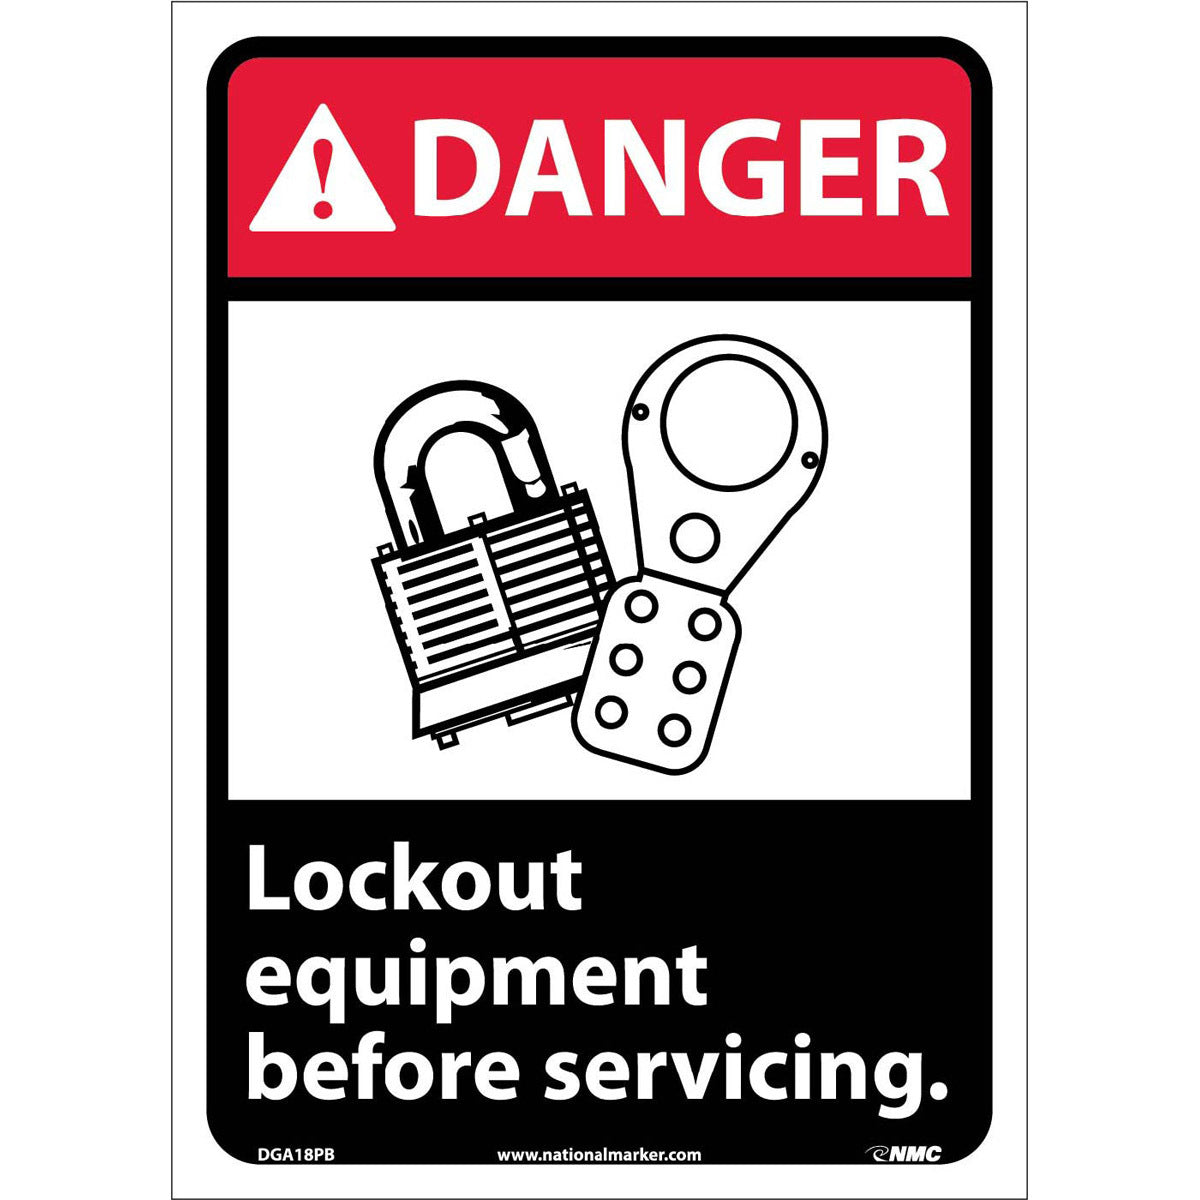 NM 14" X 10" White .0045" Pressure Sensitive Vinyl Danger Lockout Sign "DANGER Lock out equipment before servicing."